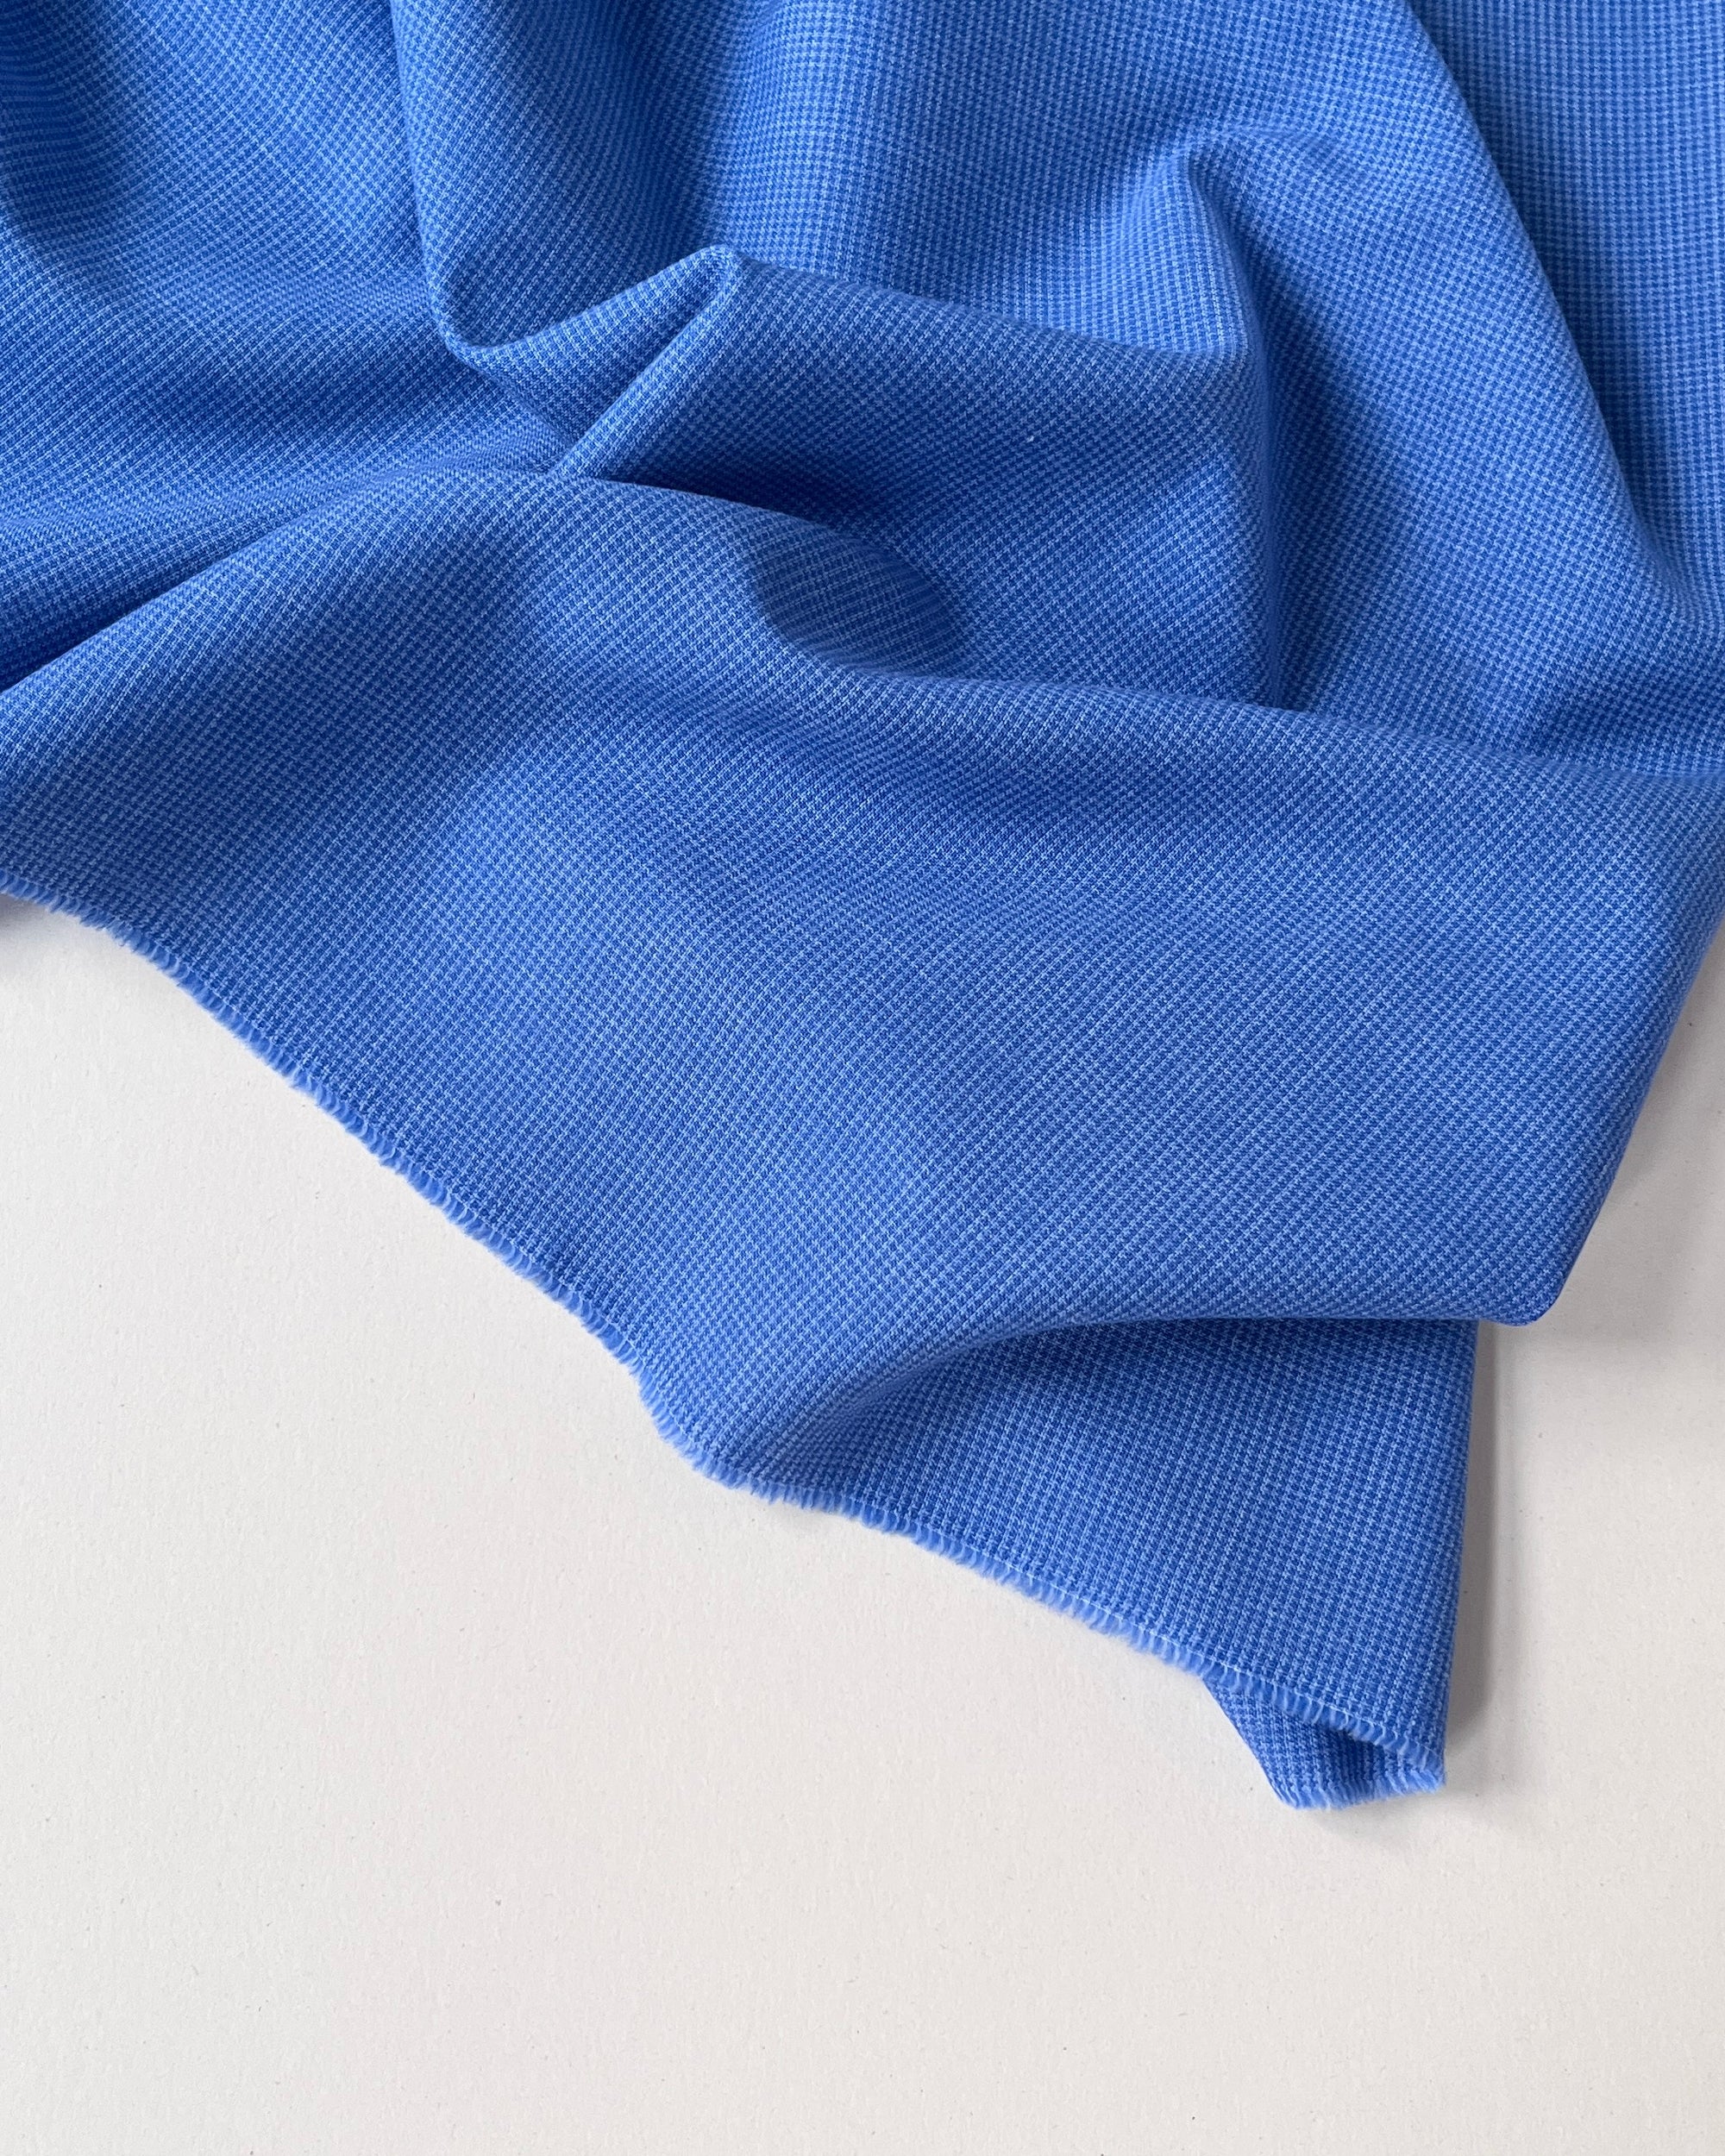 Wool Blend - Blue Grid 0,5m